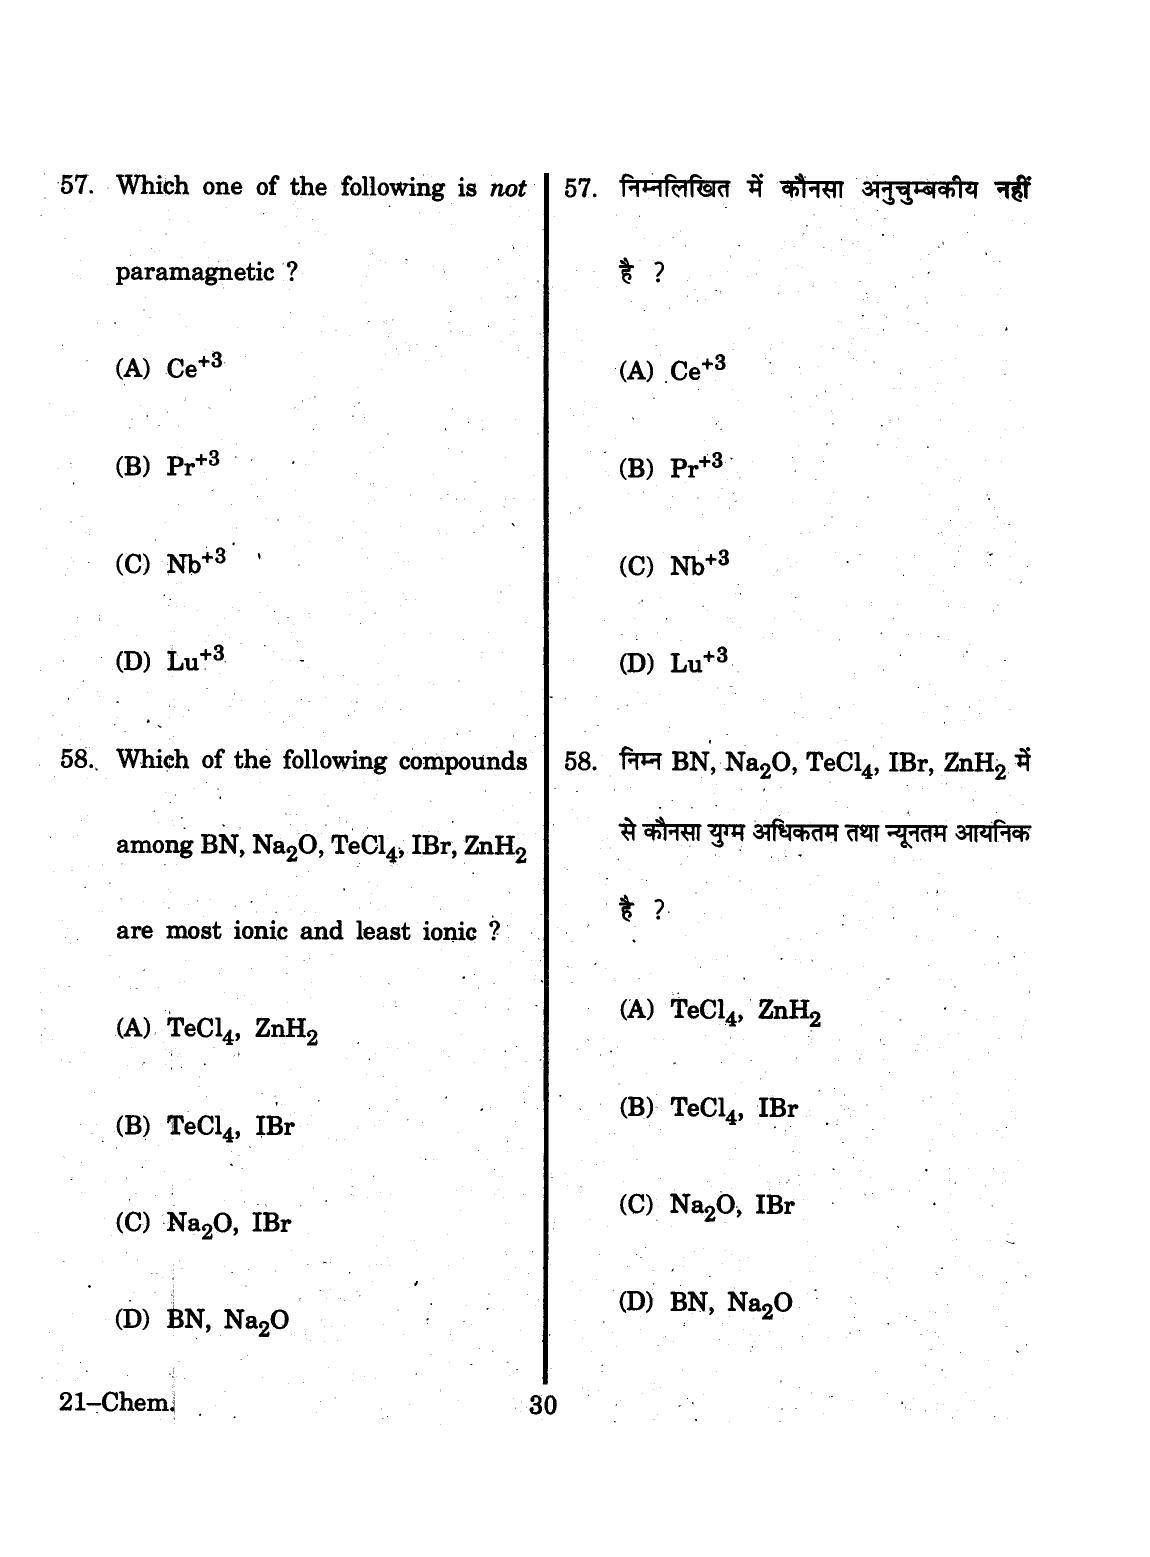 URATPG 2015 Chemisty Question Paper - Page 30